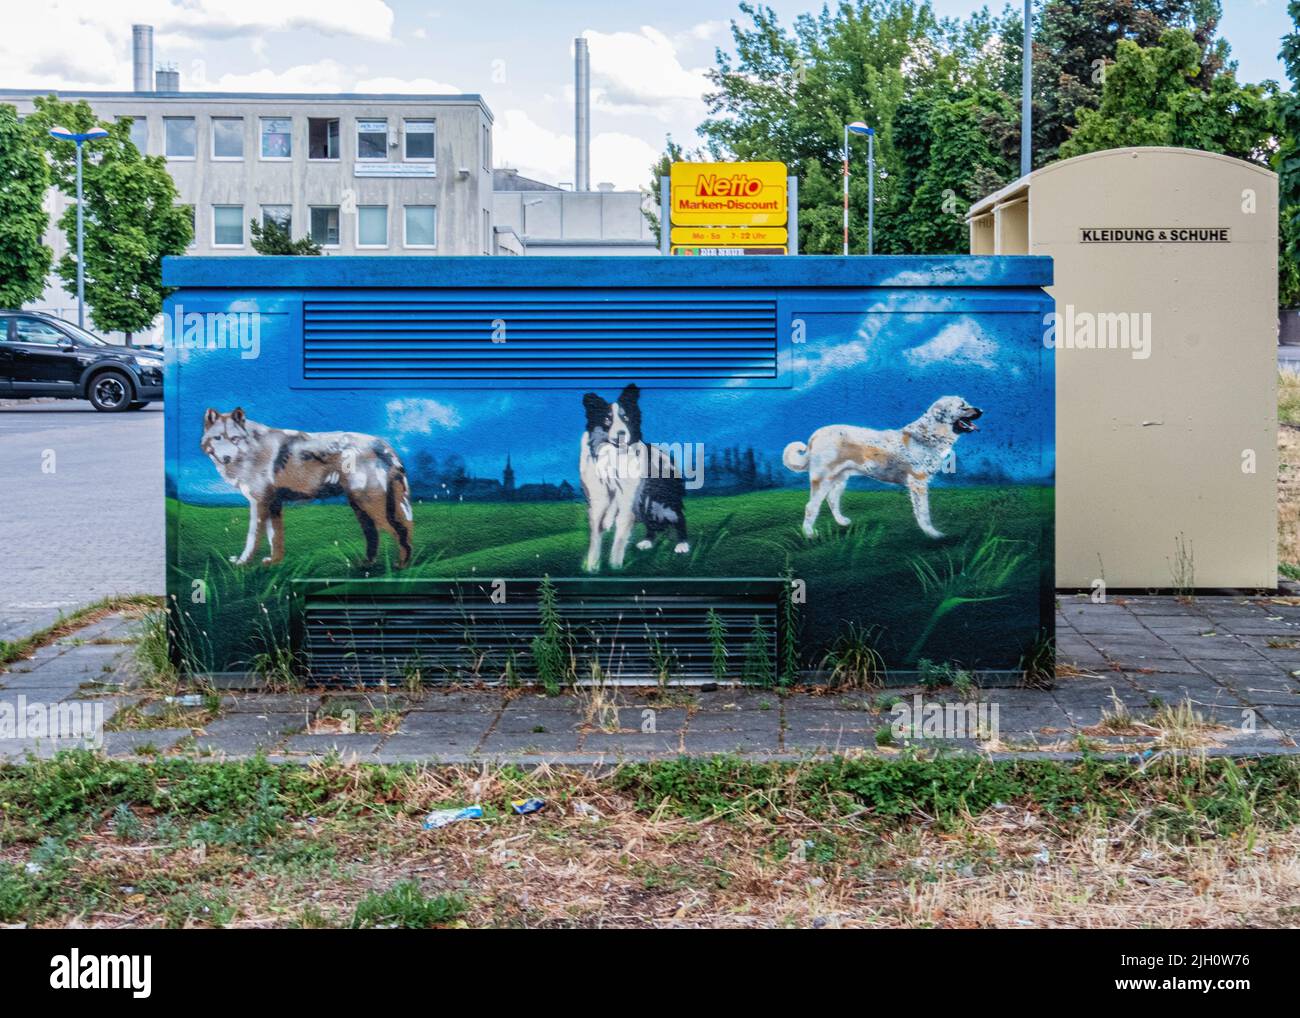 Urban art, painting of dogs on utility box in Stubenrauchstrasse, Rudow, Neukölln, Berlin, Germany Stock Photo